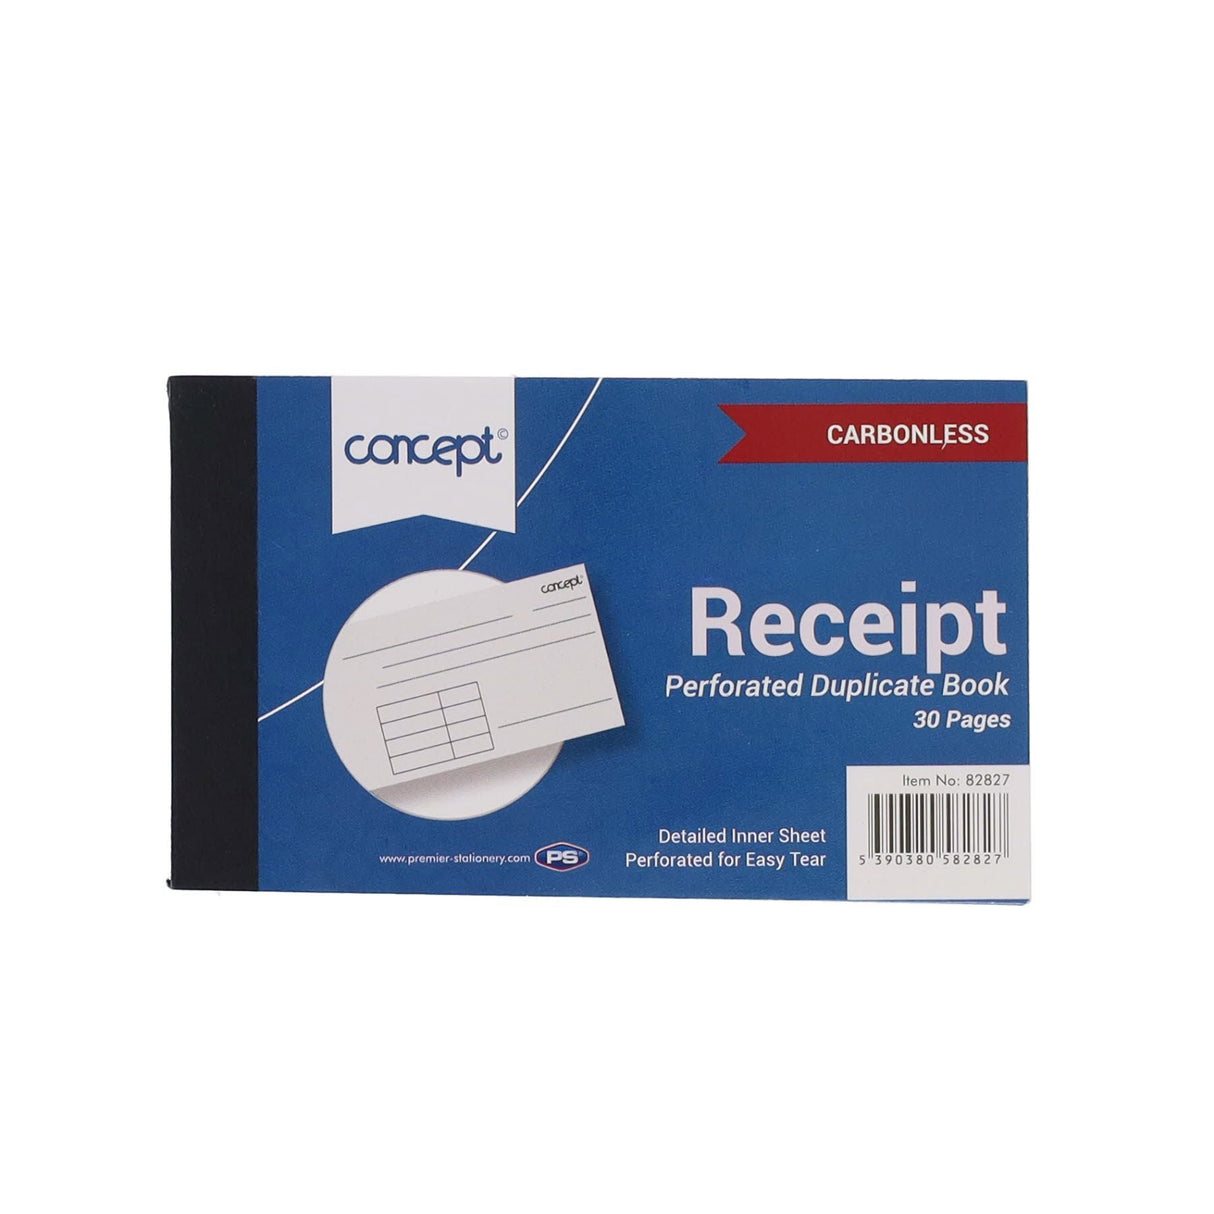 Premier Office 4x2.5 Carbonless Duplicate Cash Receipt Book | Stationery Shop UK